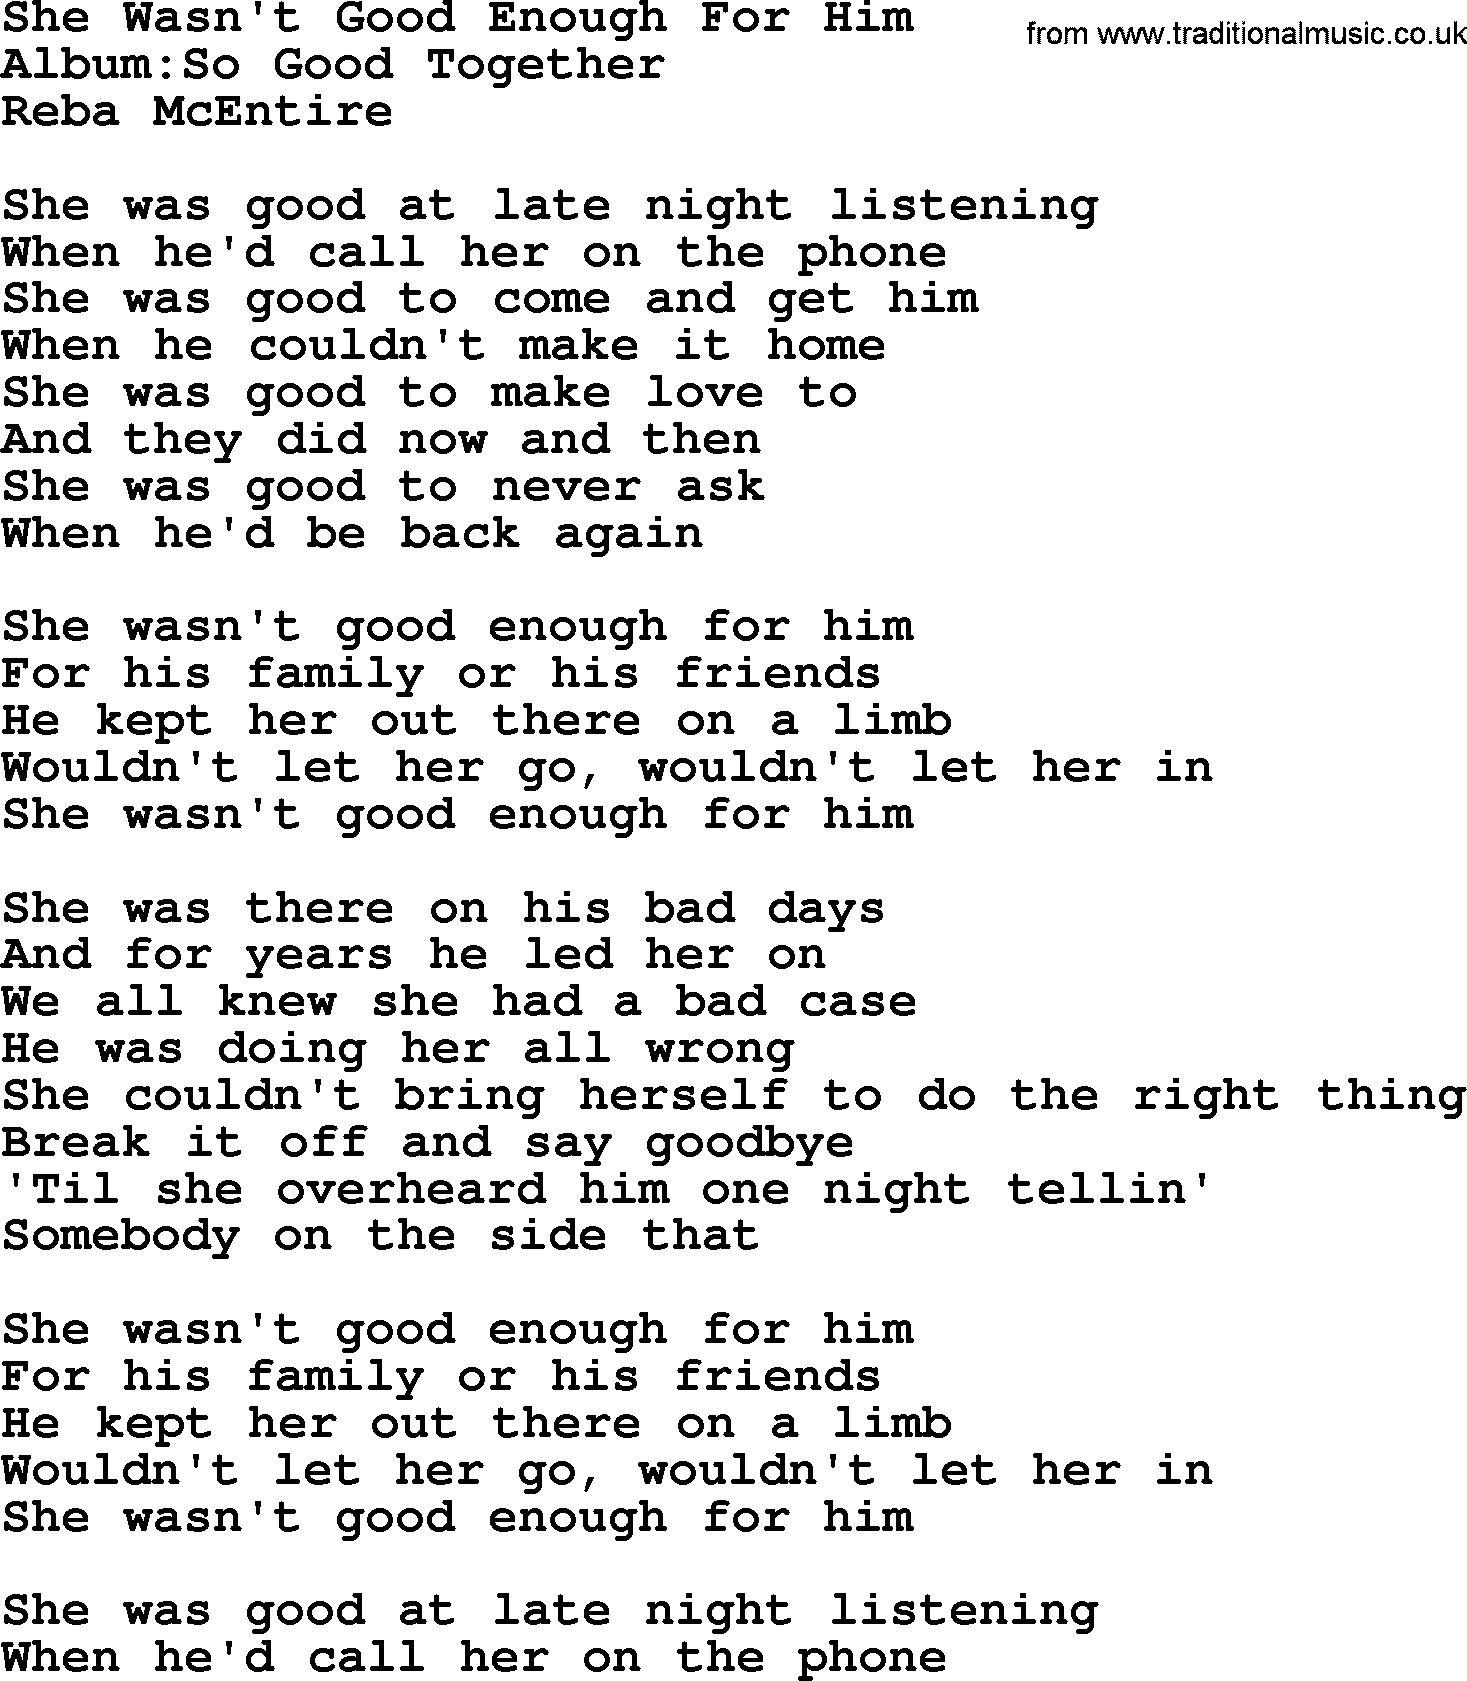 Reba McEntire song: She Wasn't Good Enough For Him lyrics